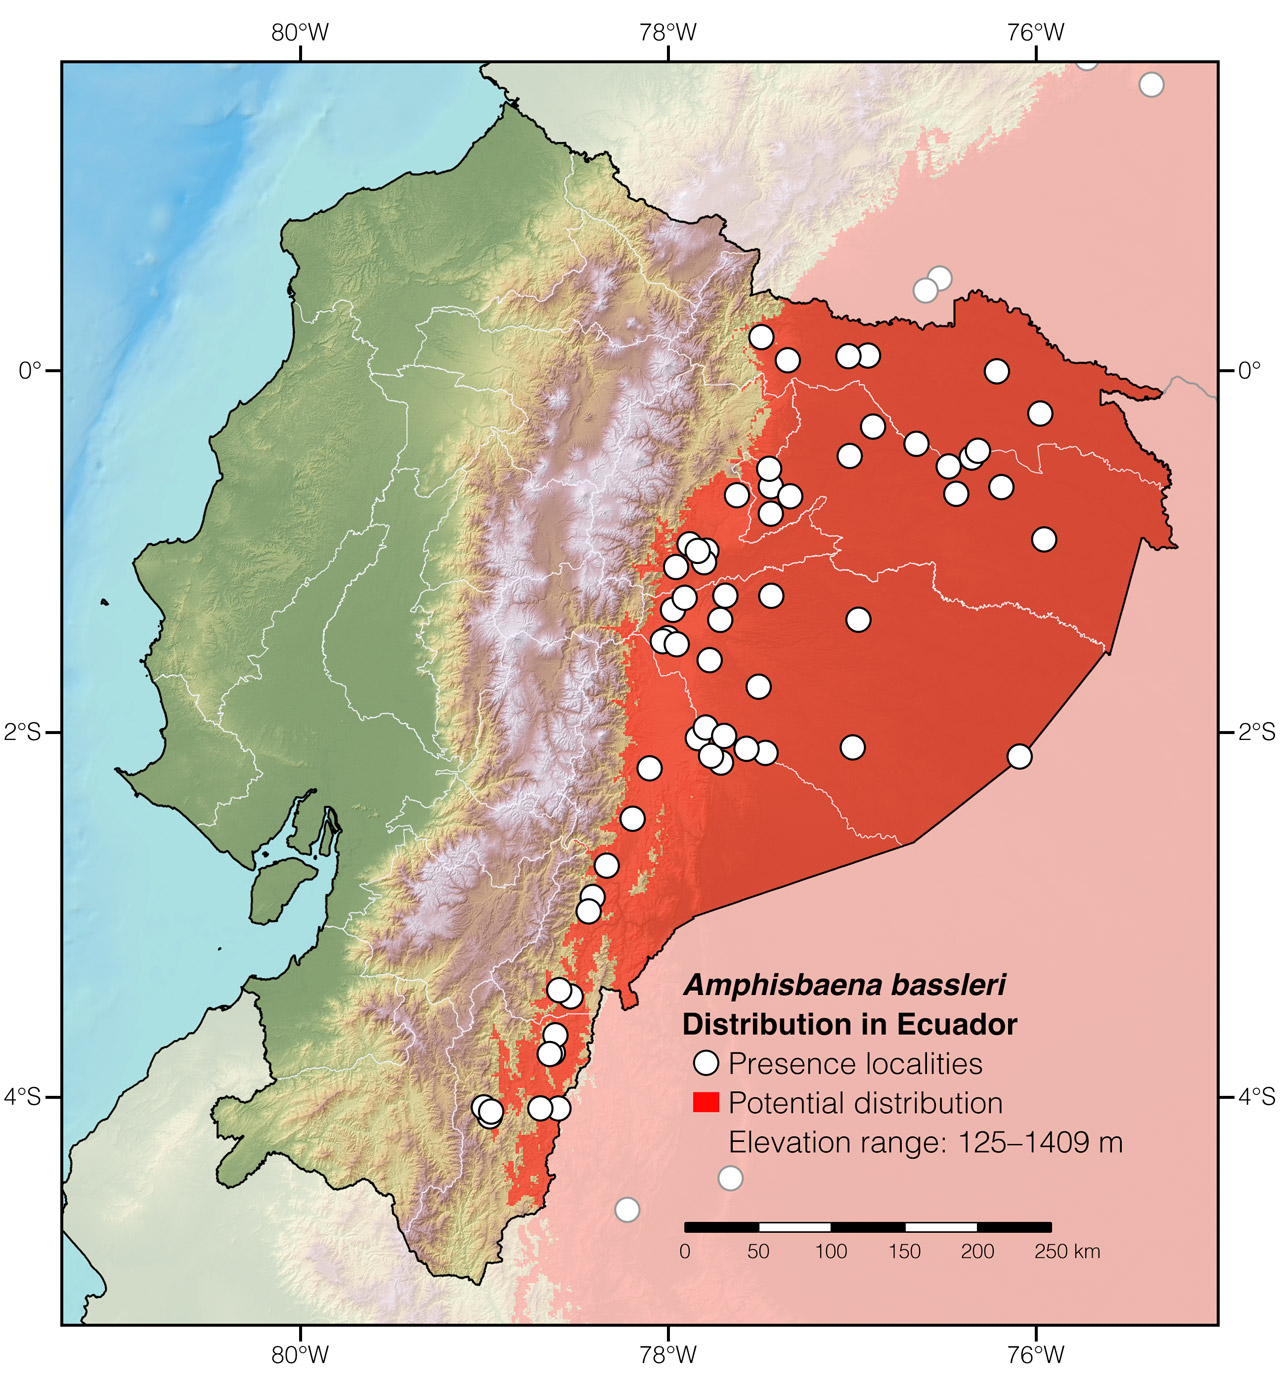 Distribution of Amphisbaena bassleri in Ecuador